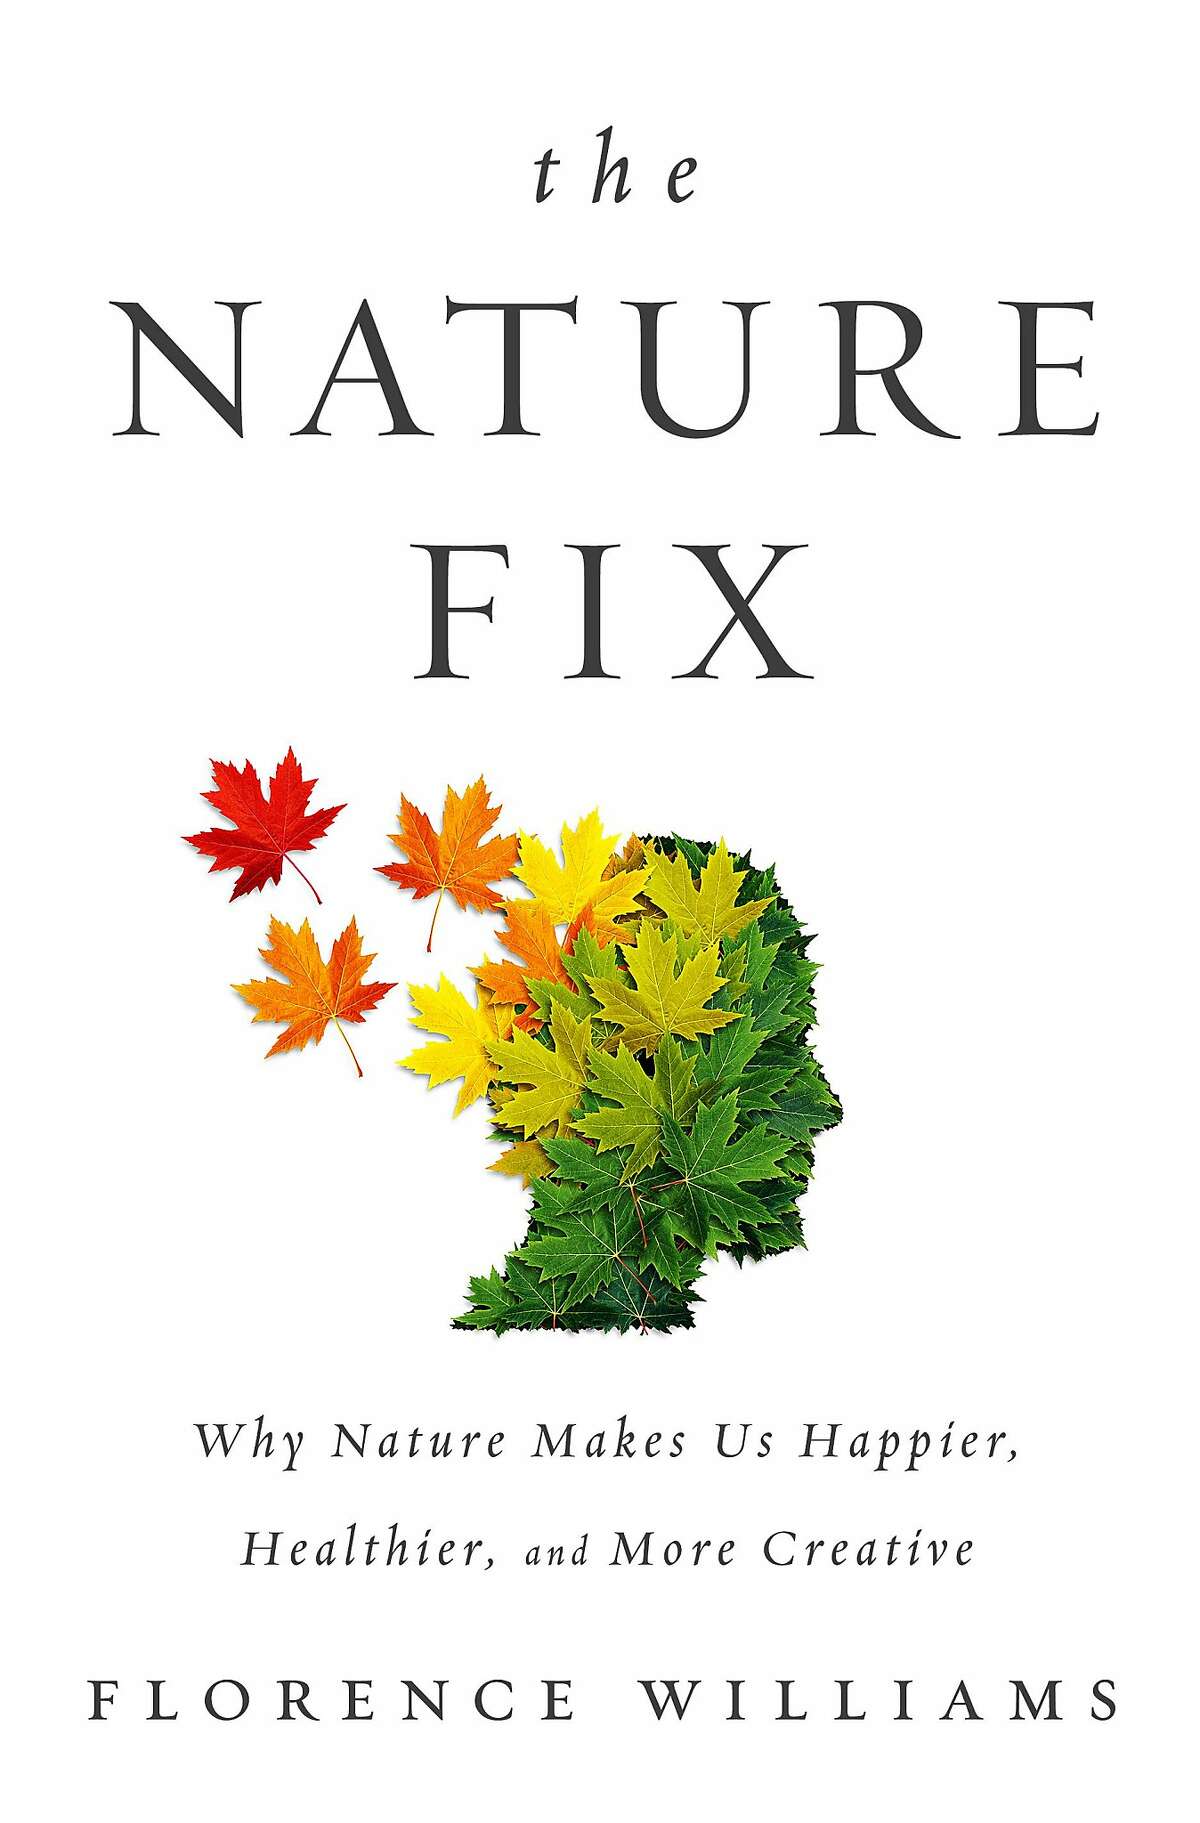 "The Nature Fix"